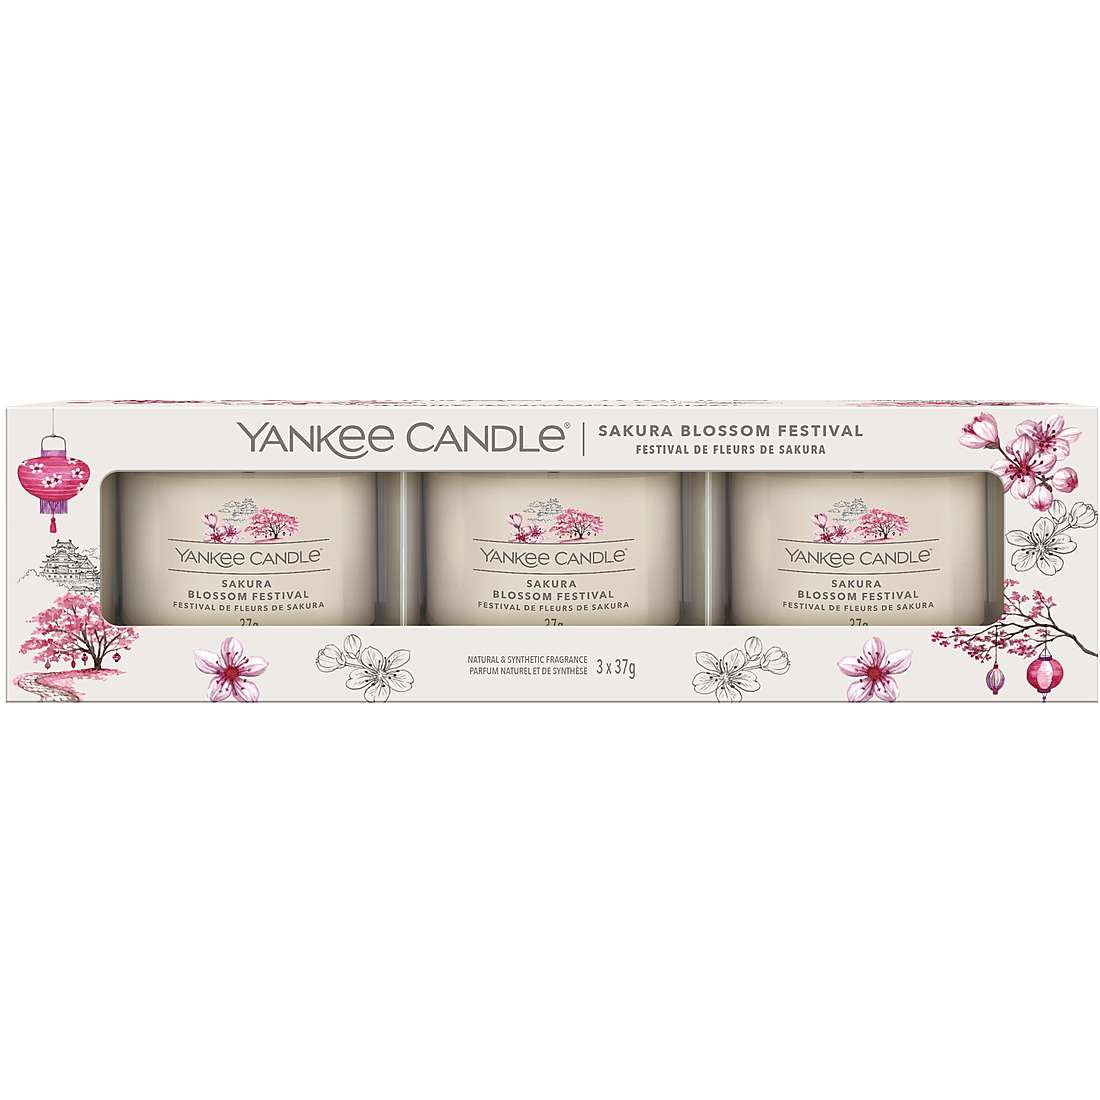 Candela Yankee Candle Box Regalo Sakura Blossom colore Rosa 1632515E